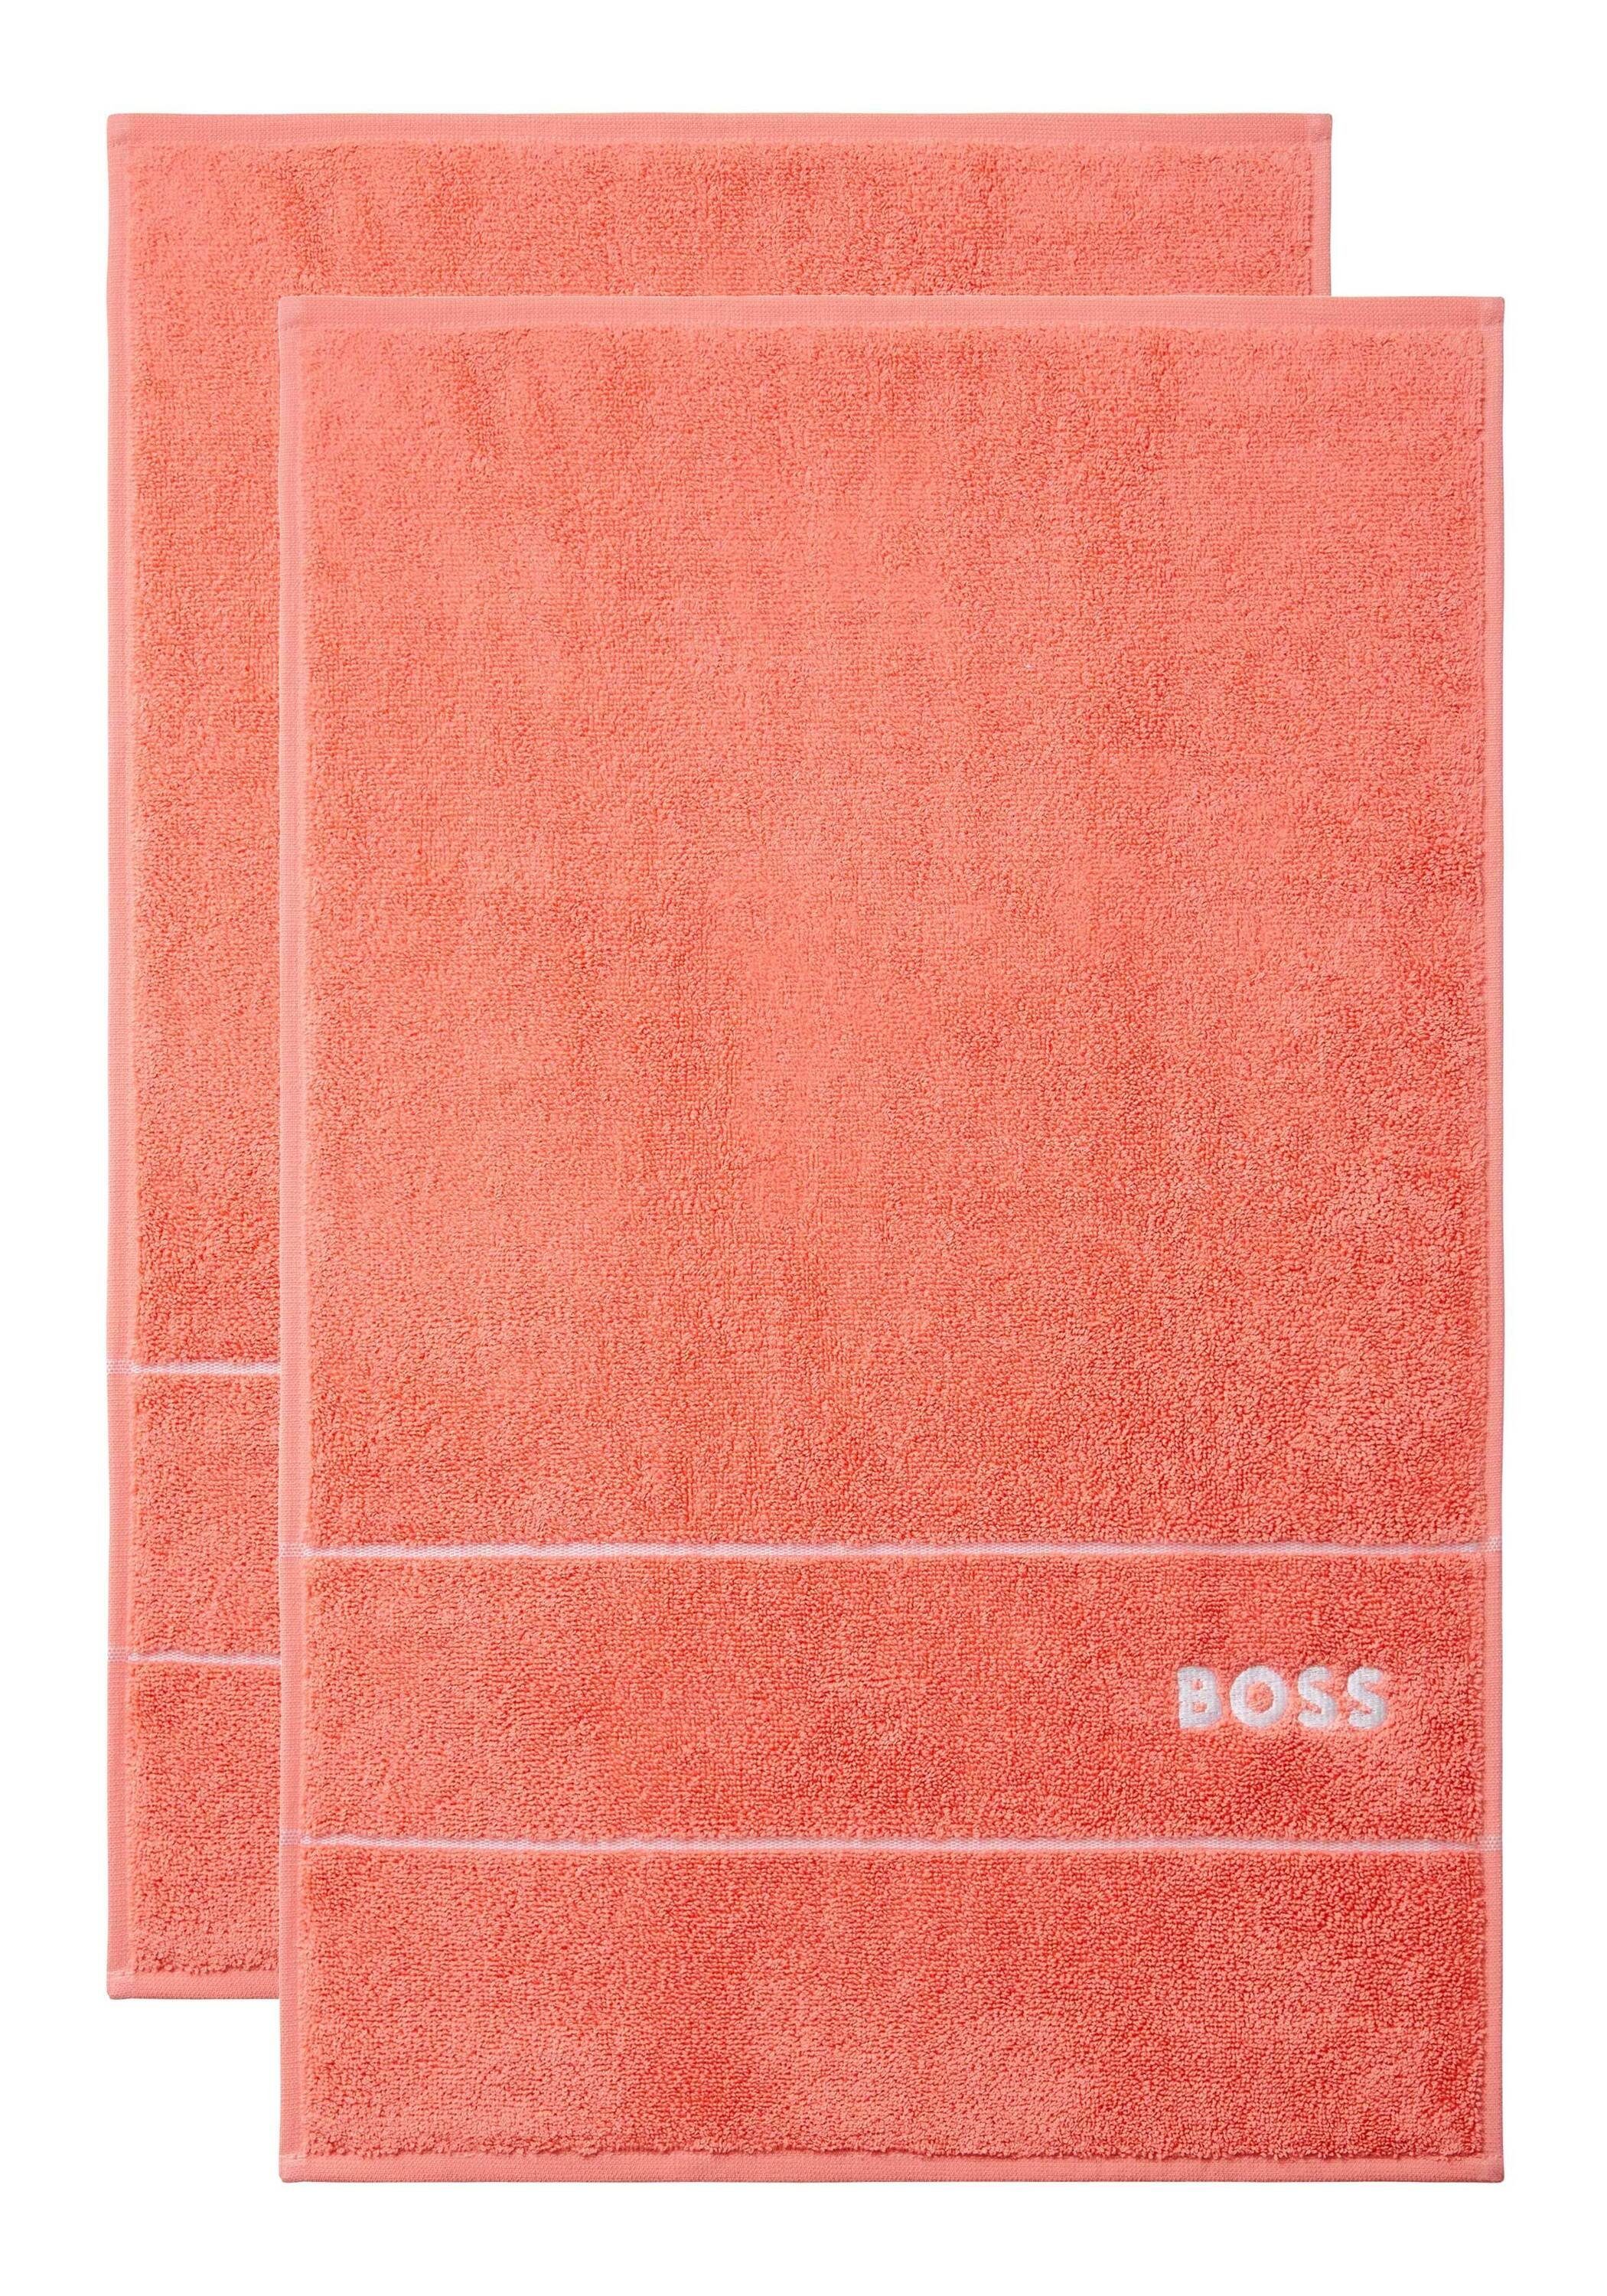 Hugo Boss Home Gästehandtücher PLAIN (2tlg), 100% Baumwolle, mit modernem Design SORBETN